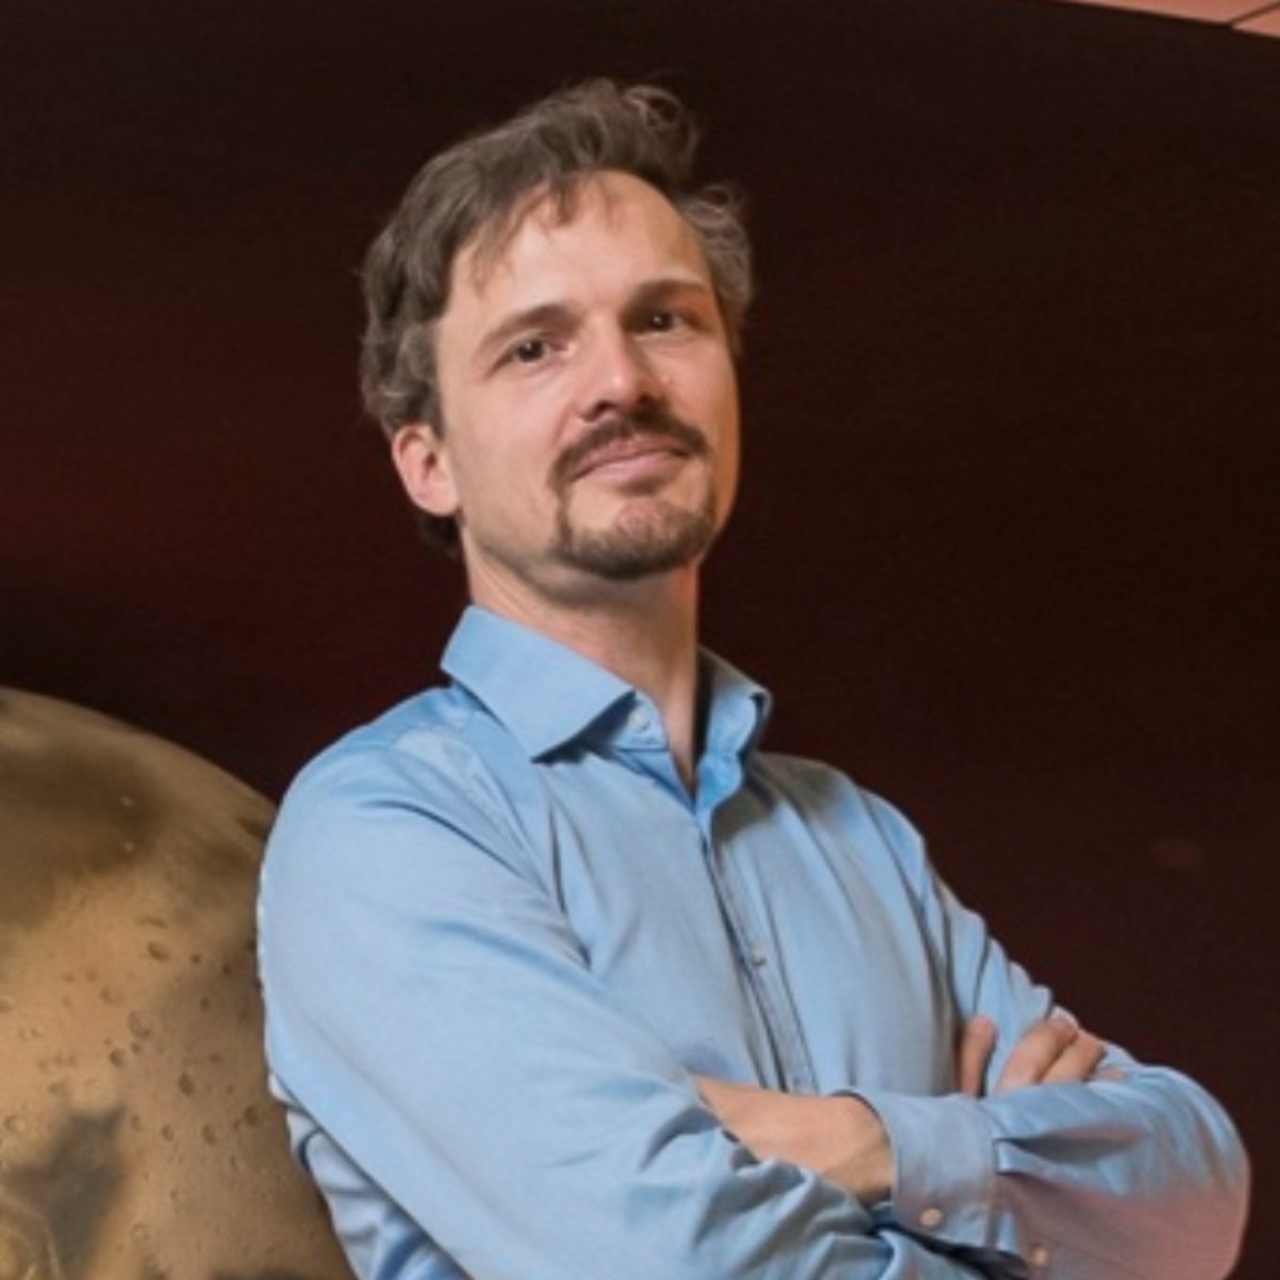 Kosmosesüsteemide magister: Simon Christian Stähler ETH-st